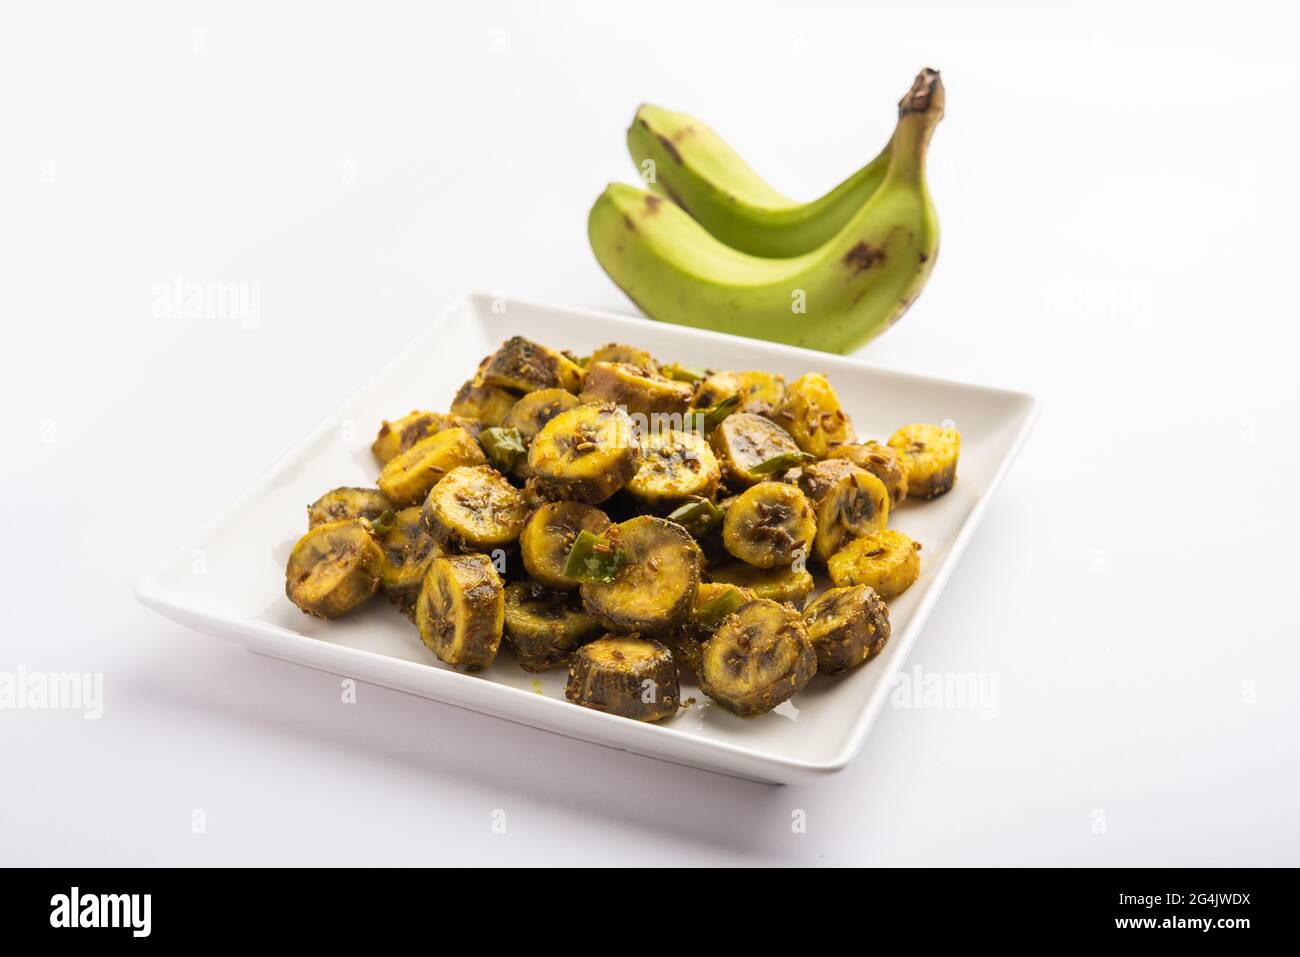 Bananone crudo sabzi o kacchey kele ki sabji popolare negli stati costieri dell'India come kerla, goa e maharashtra Foto Stock